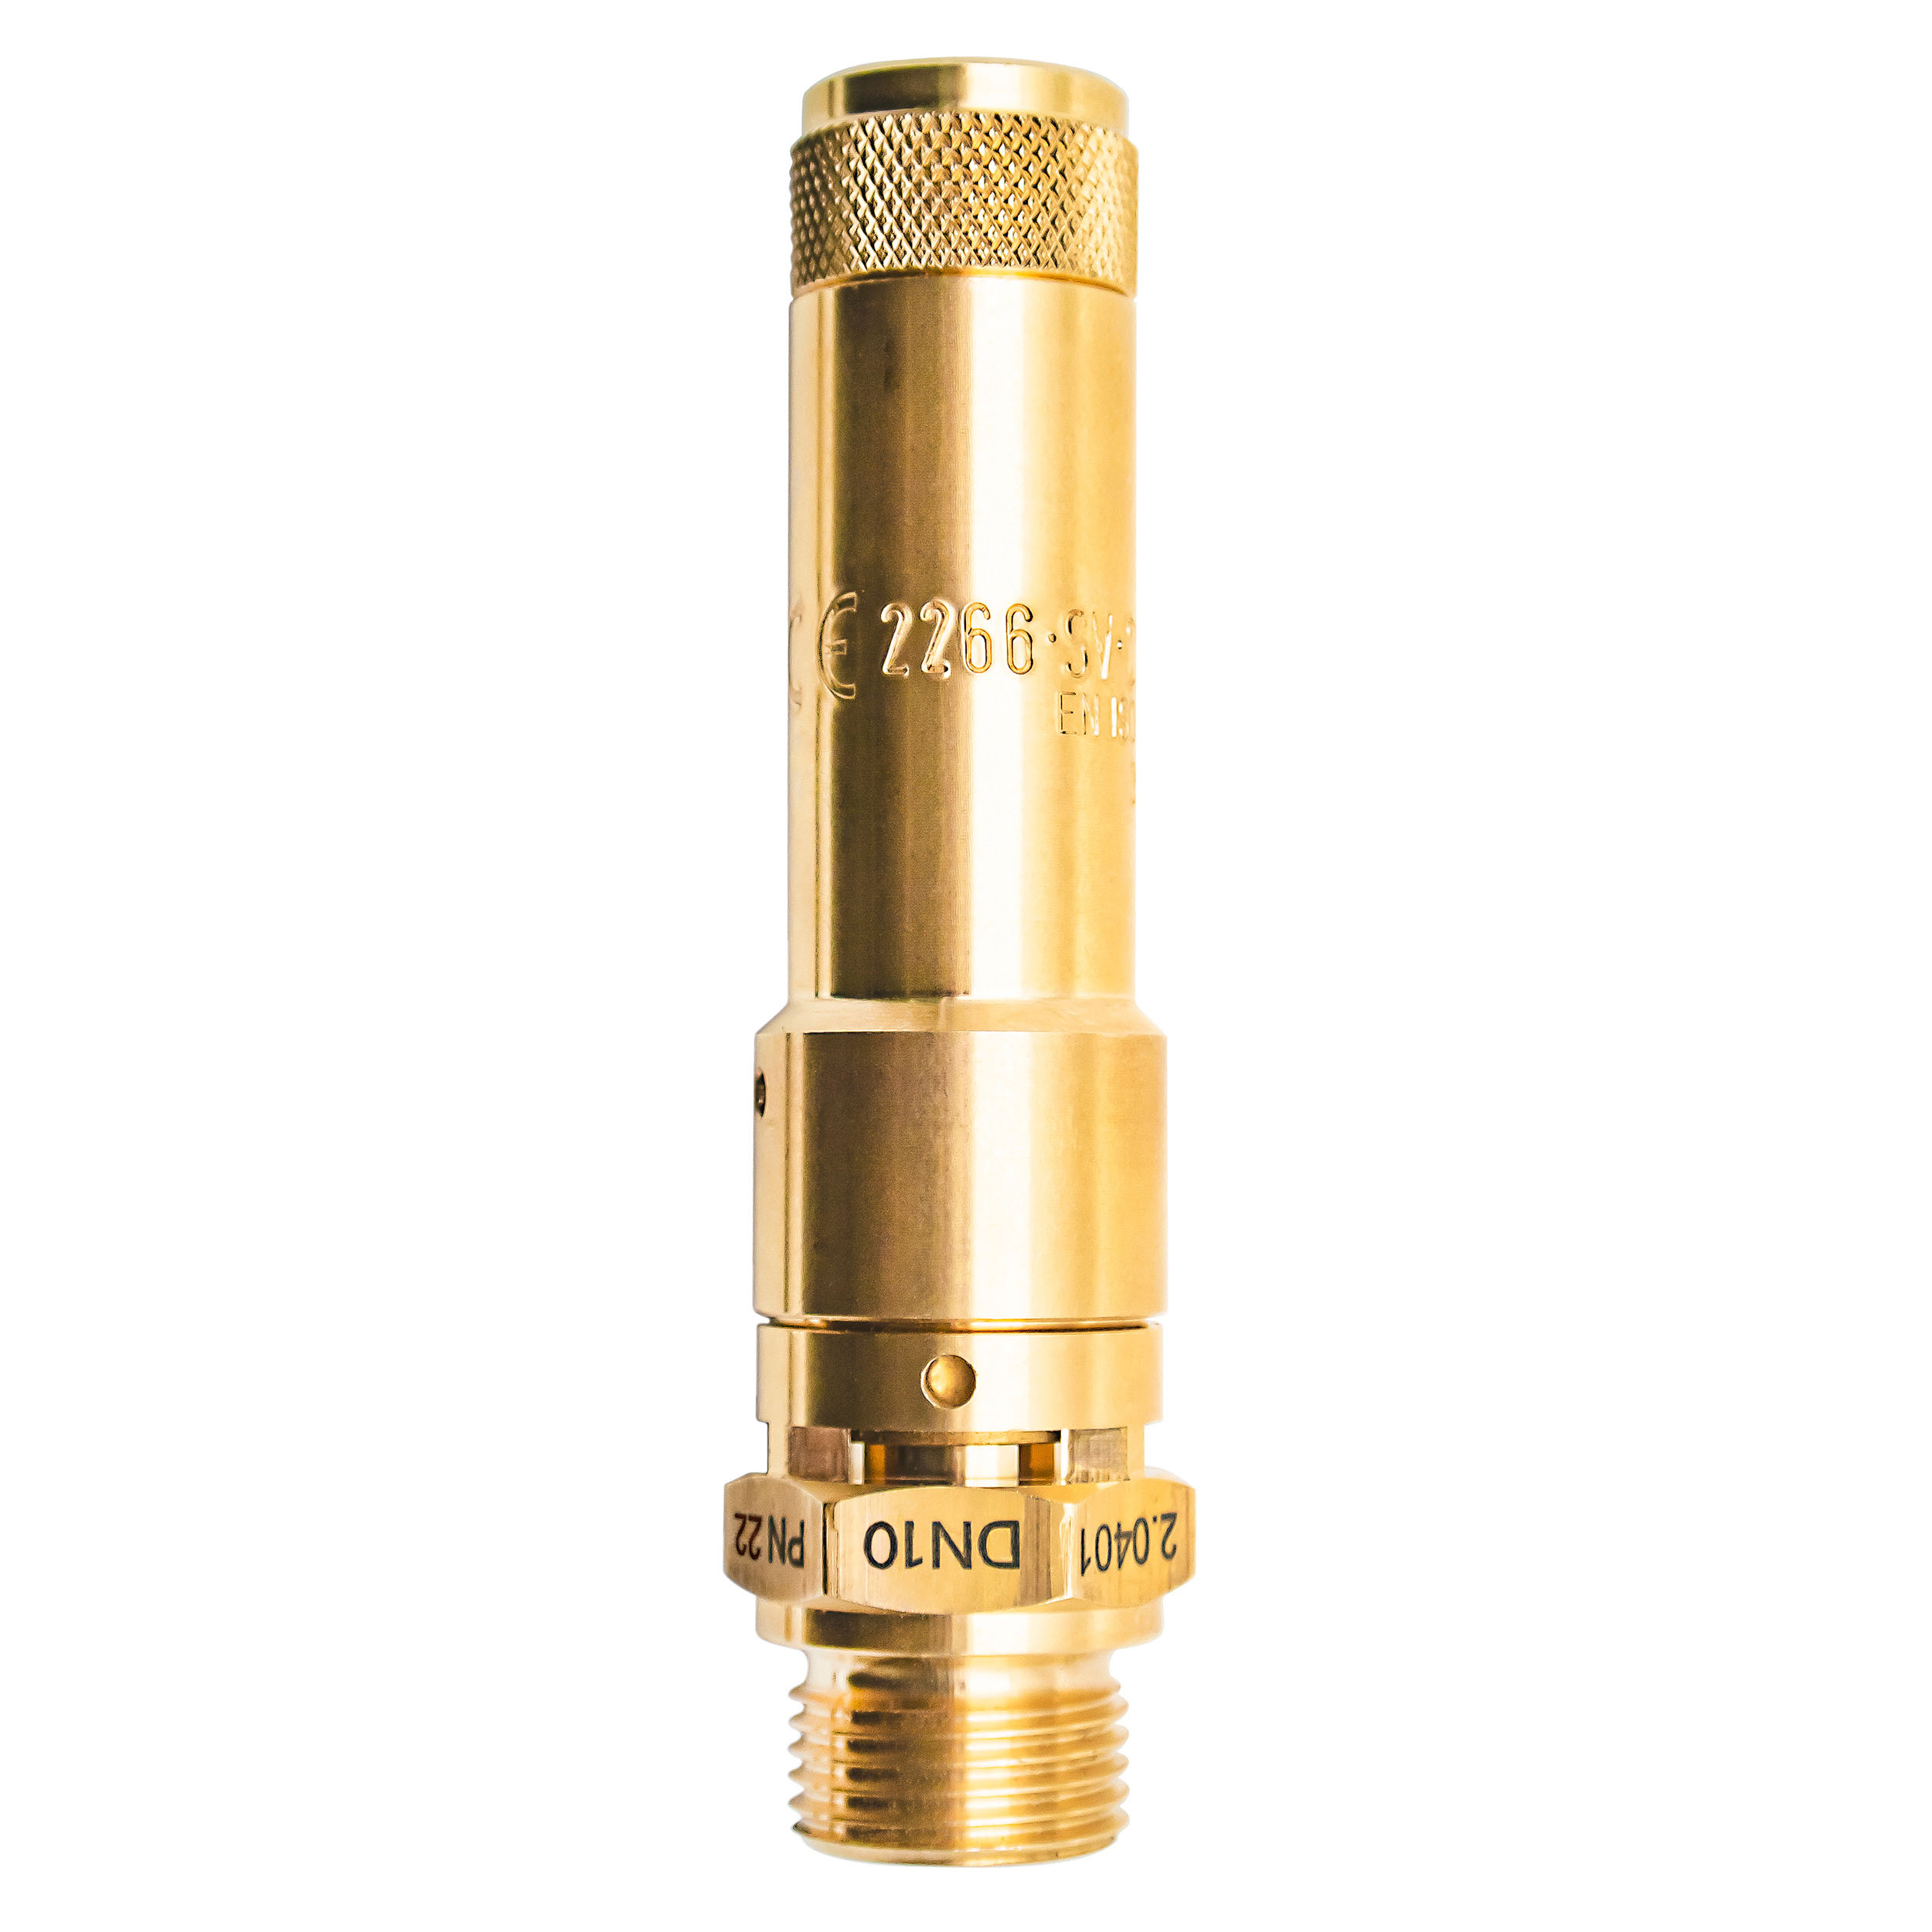 Component-tested safety valve DN 10, G¾, pressure: 7.1-8.5 bar